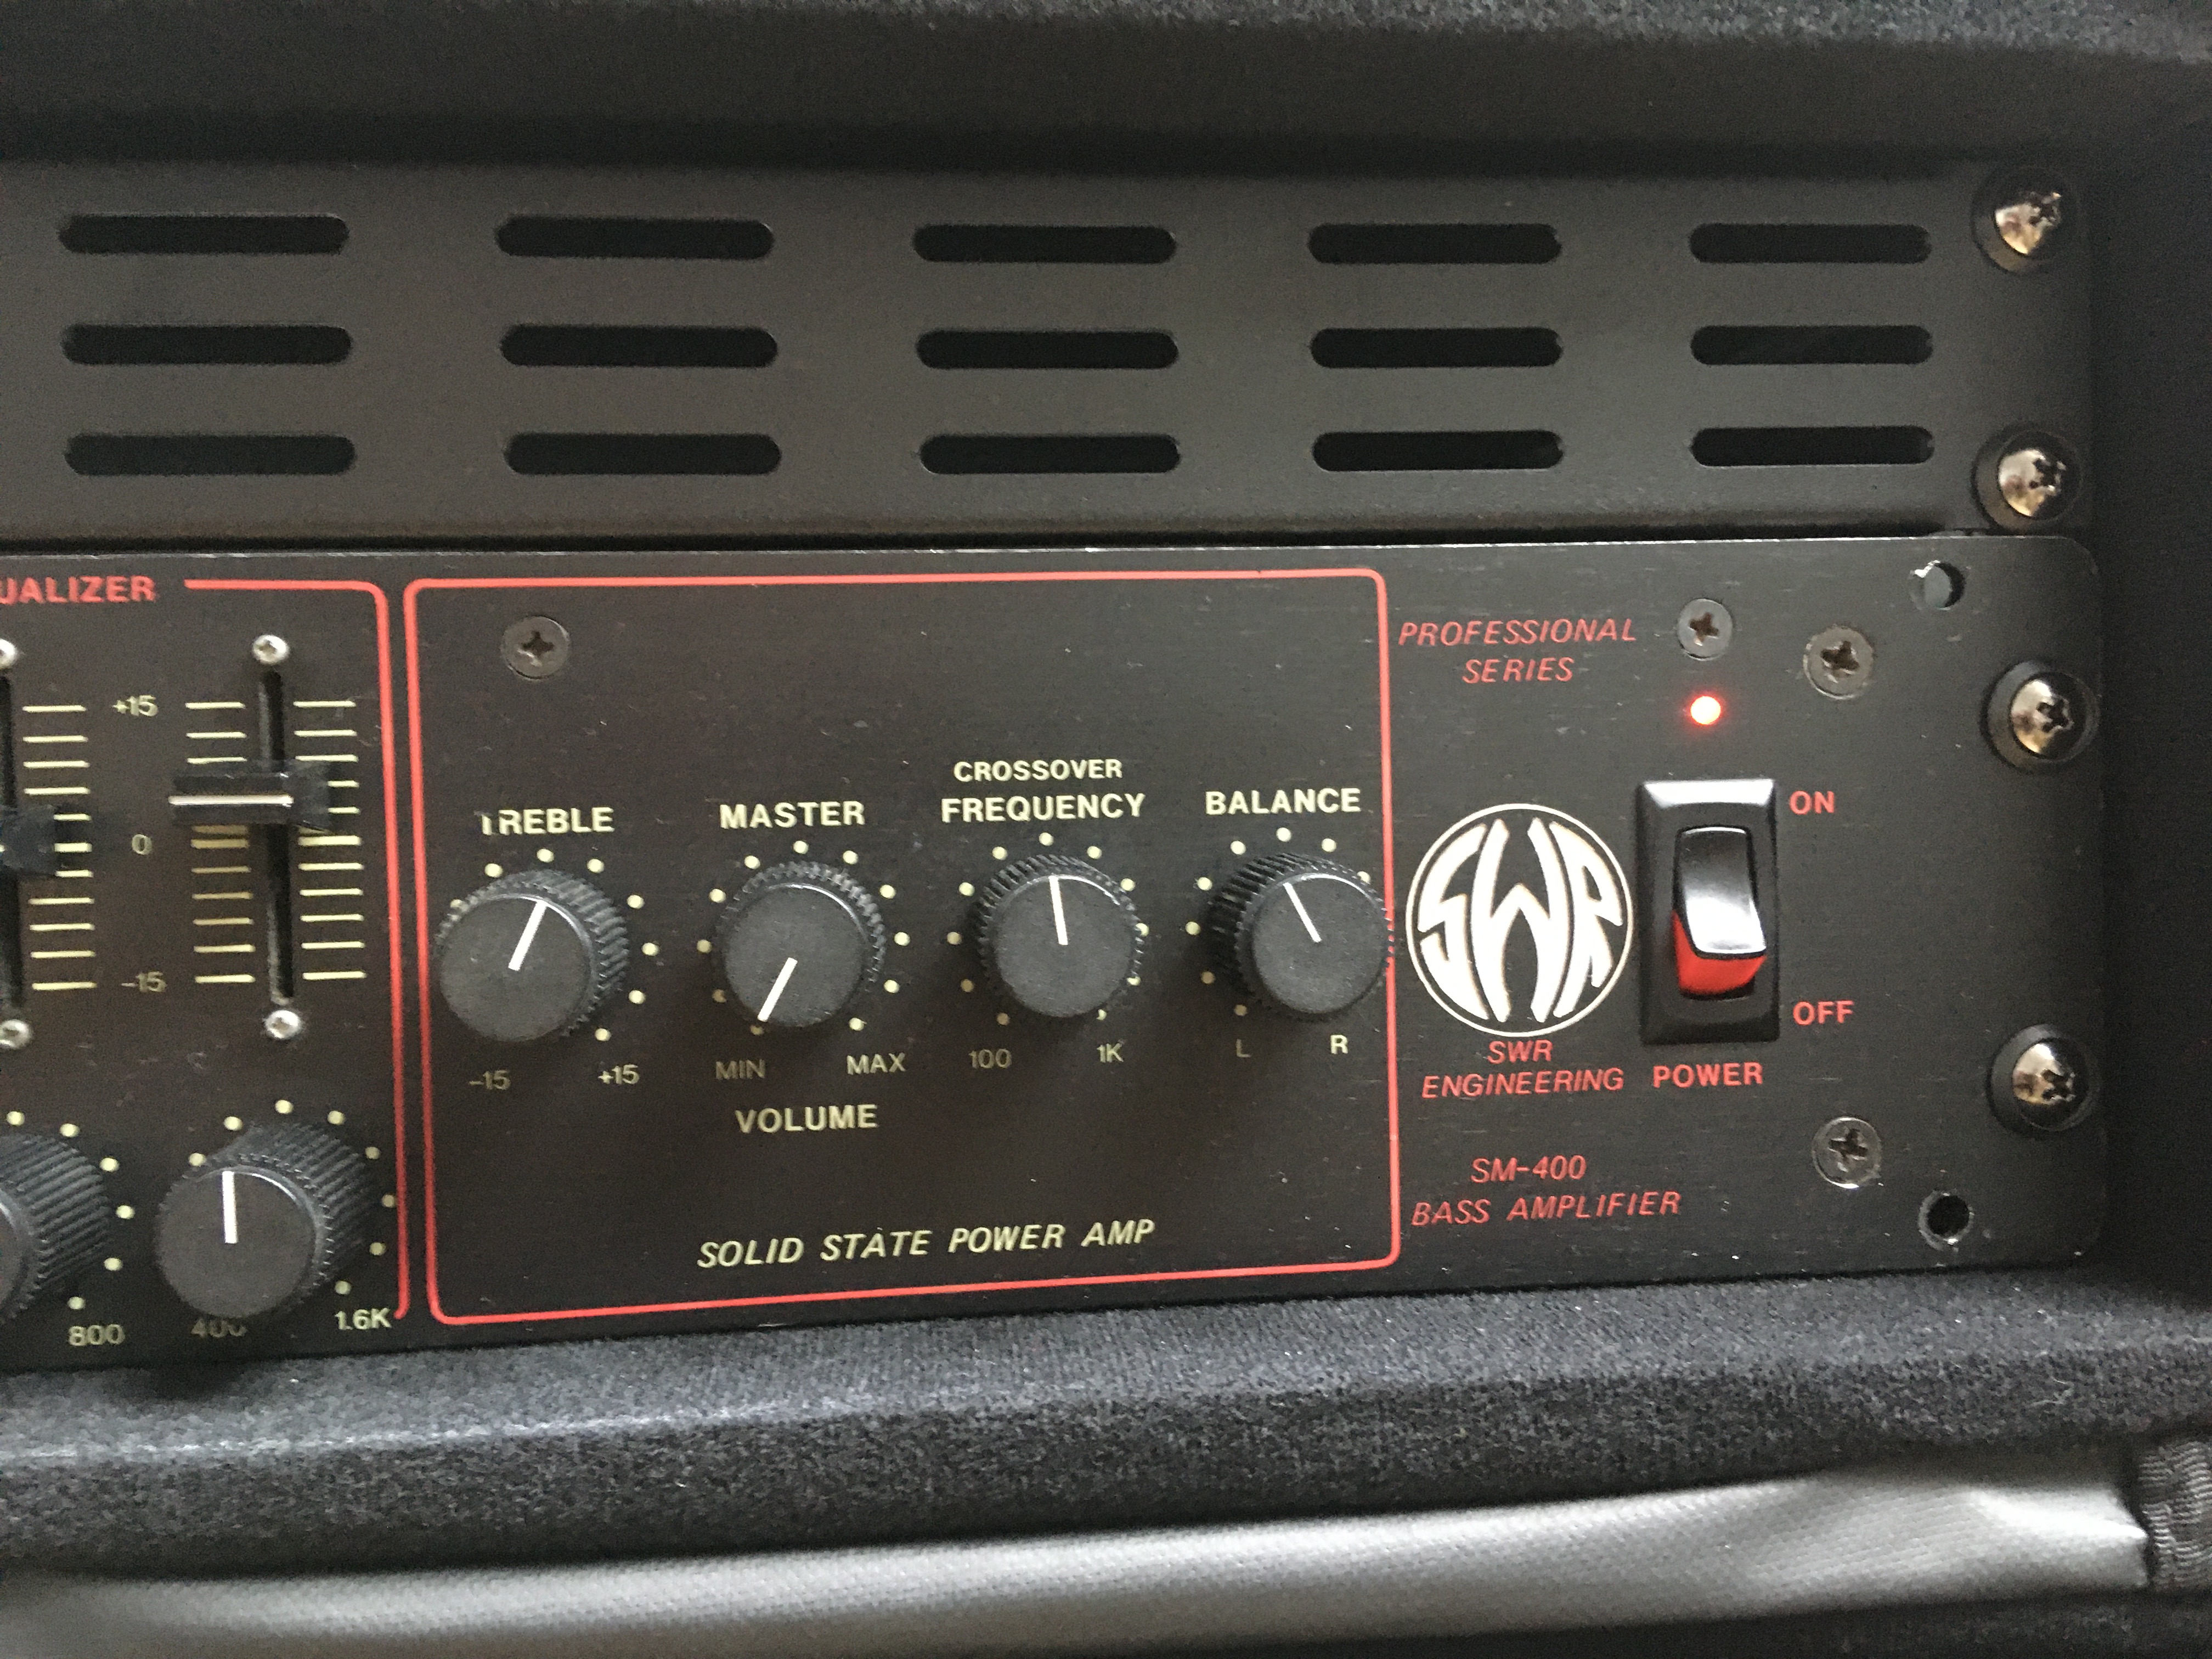 SM-400 - SWR SM-400 - Audiofanzine